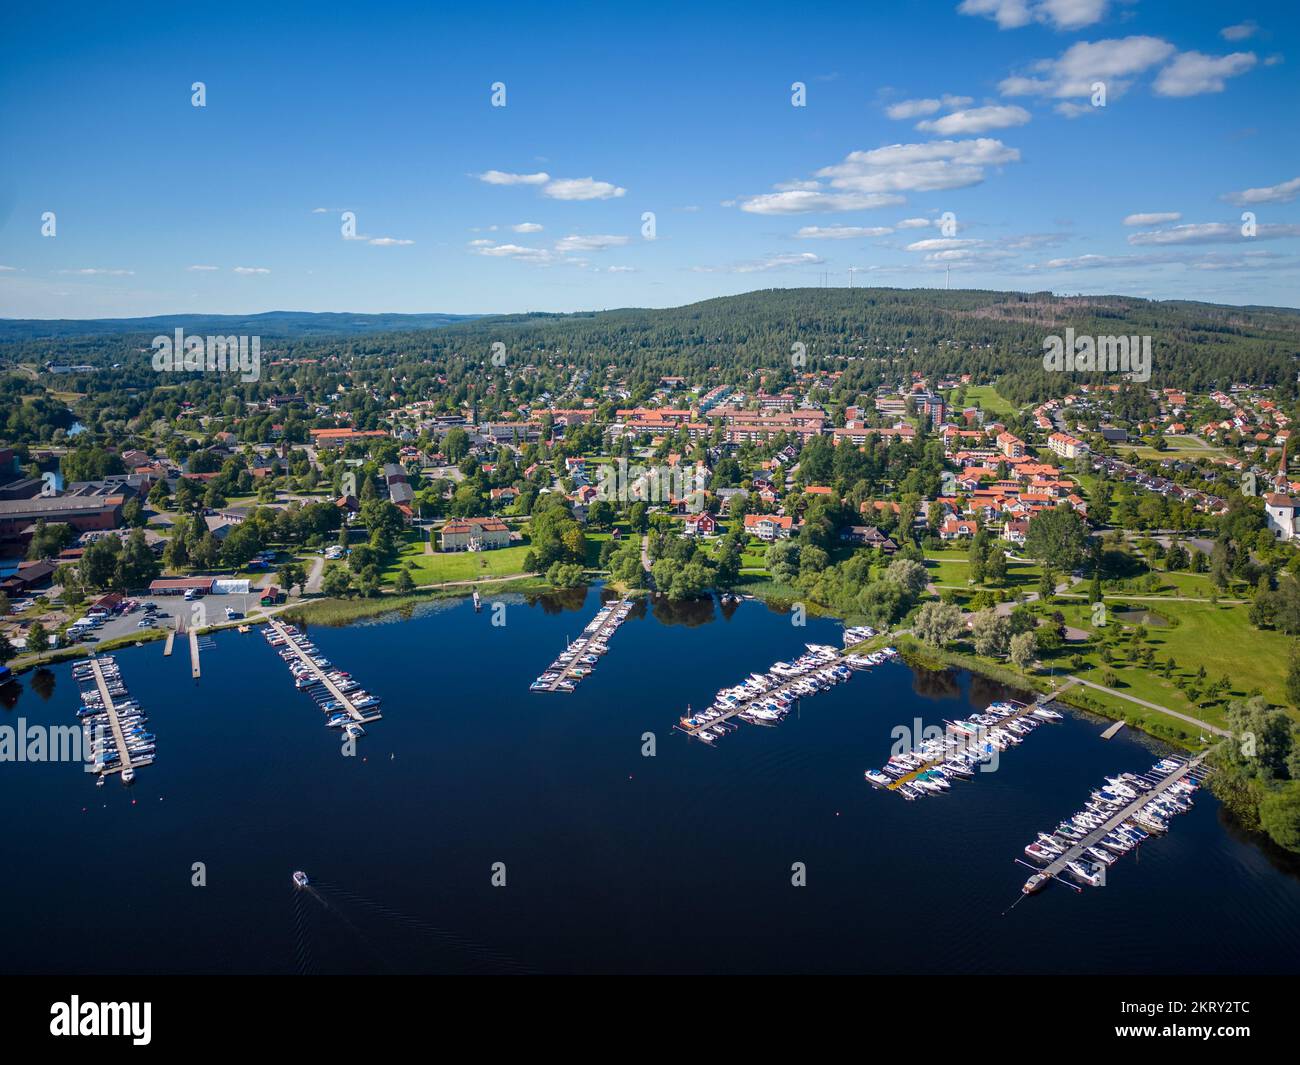 Town called Smedjebacken and lake Norra Barken in Dalarna, Sweden Stock Photo